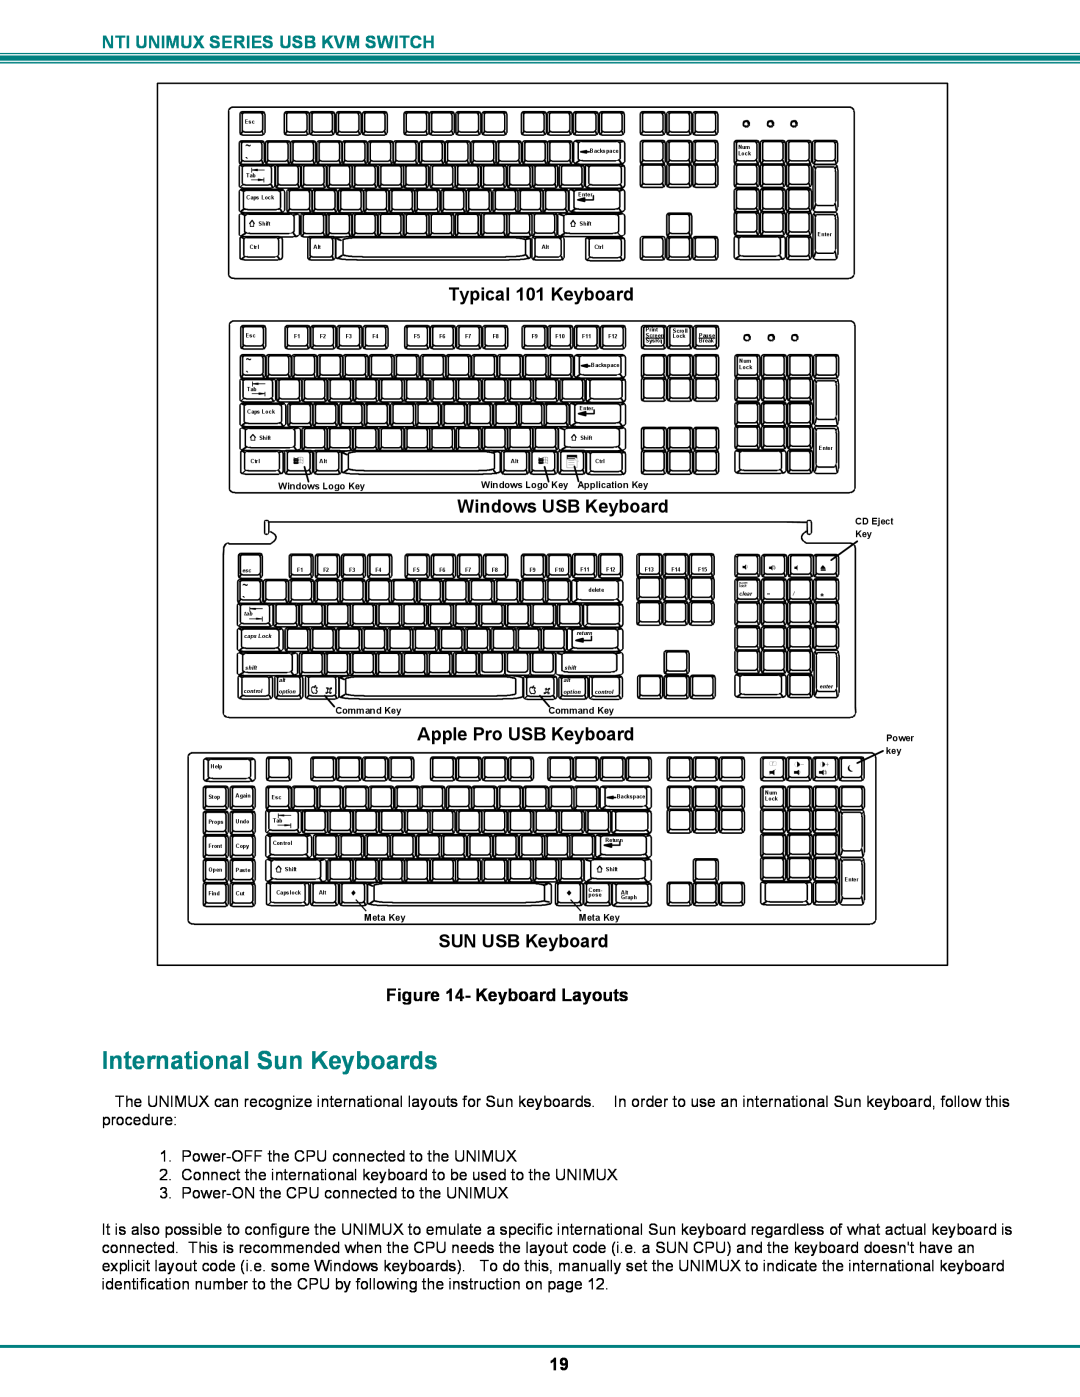 Network Technologies UNIMUX-DVI-xHD International Sun Keyboards, Typical 101 Keyboard, SUN USB Keyboard, Keyboard Layouts 